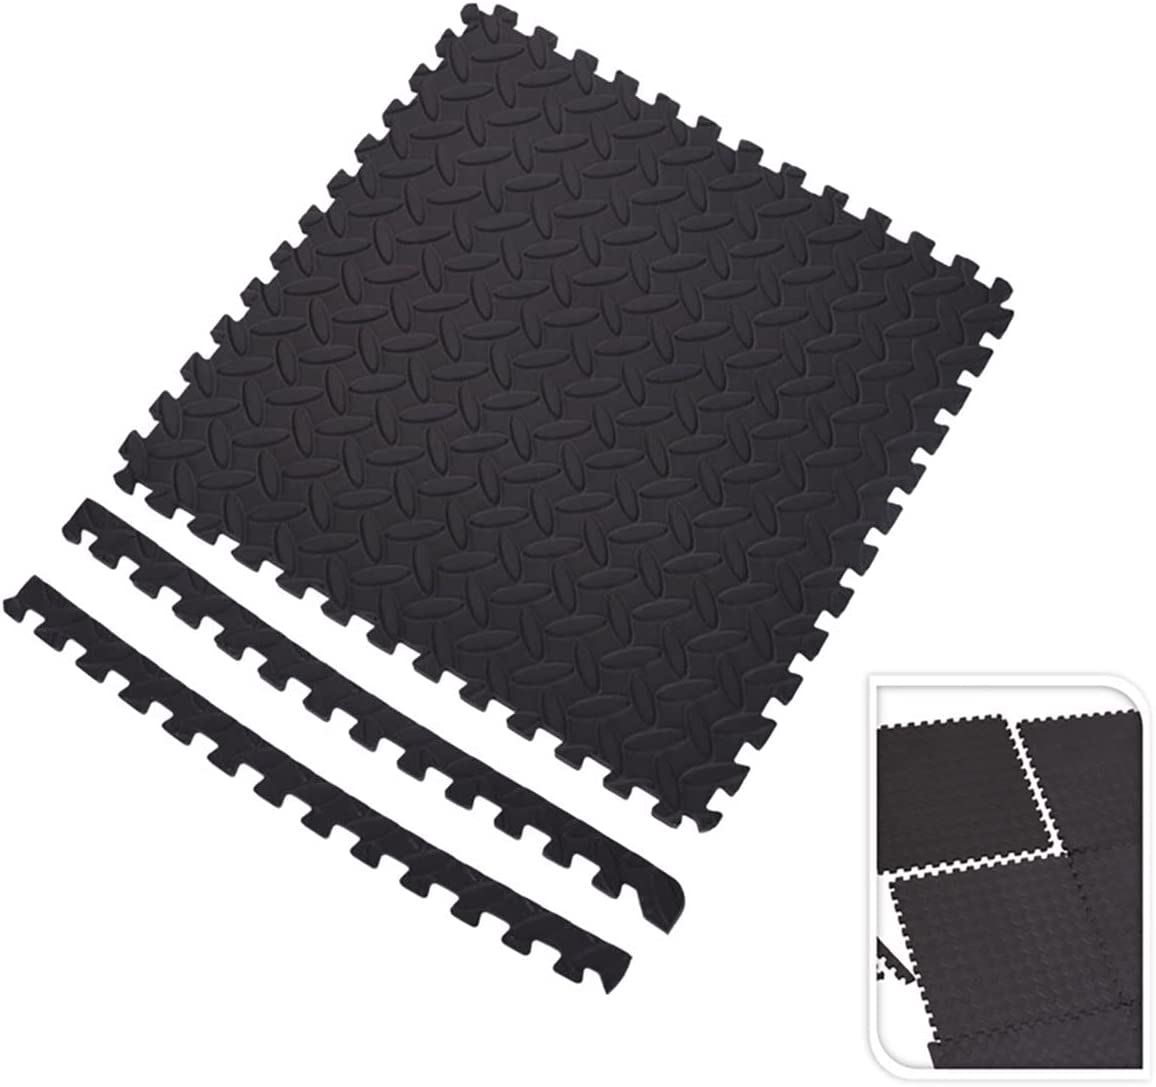 Tappetino fitness puzzle in schiuma eva nero 40x 40 cm (6 pezzi) Koopman 491210040